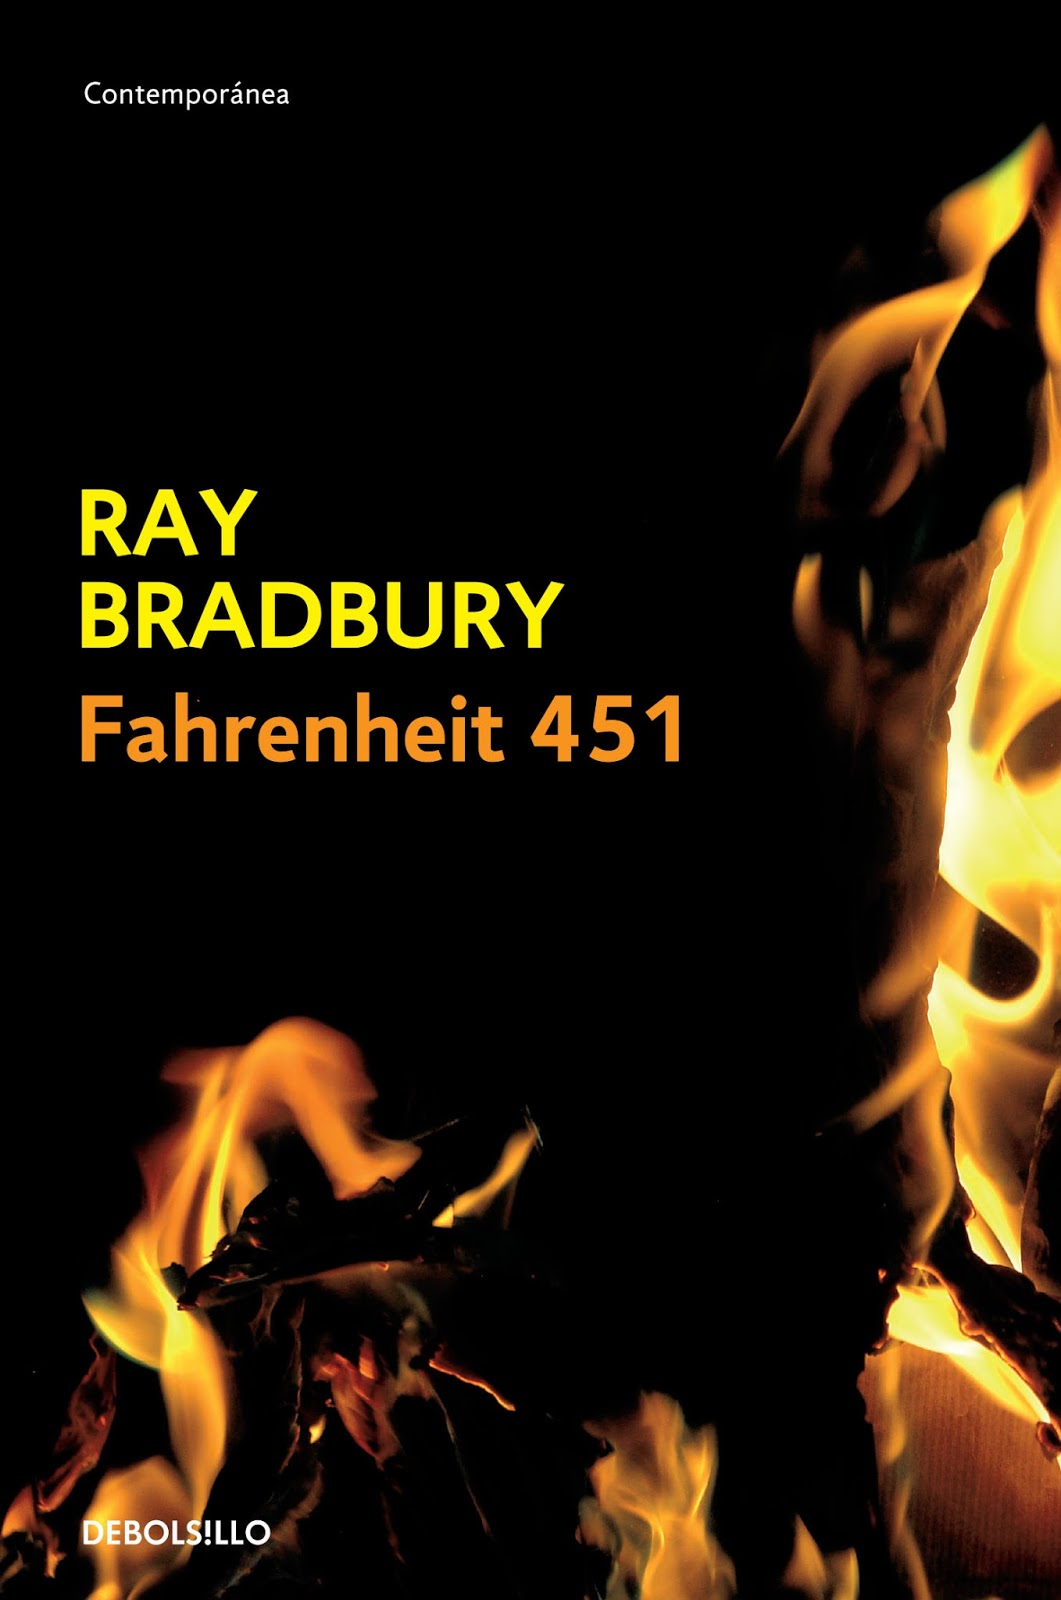 Ray bradbury